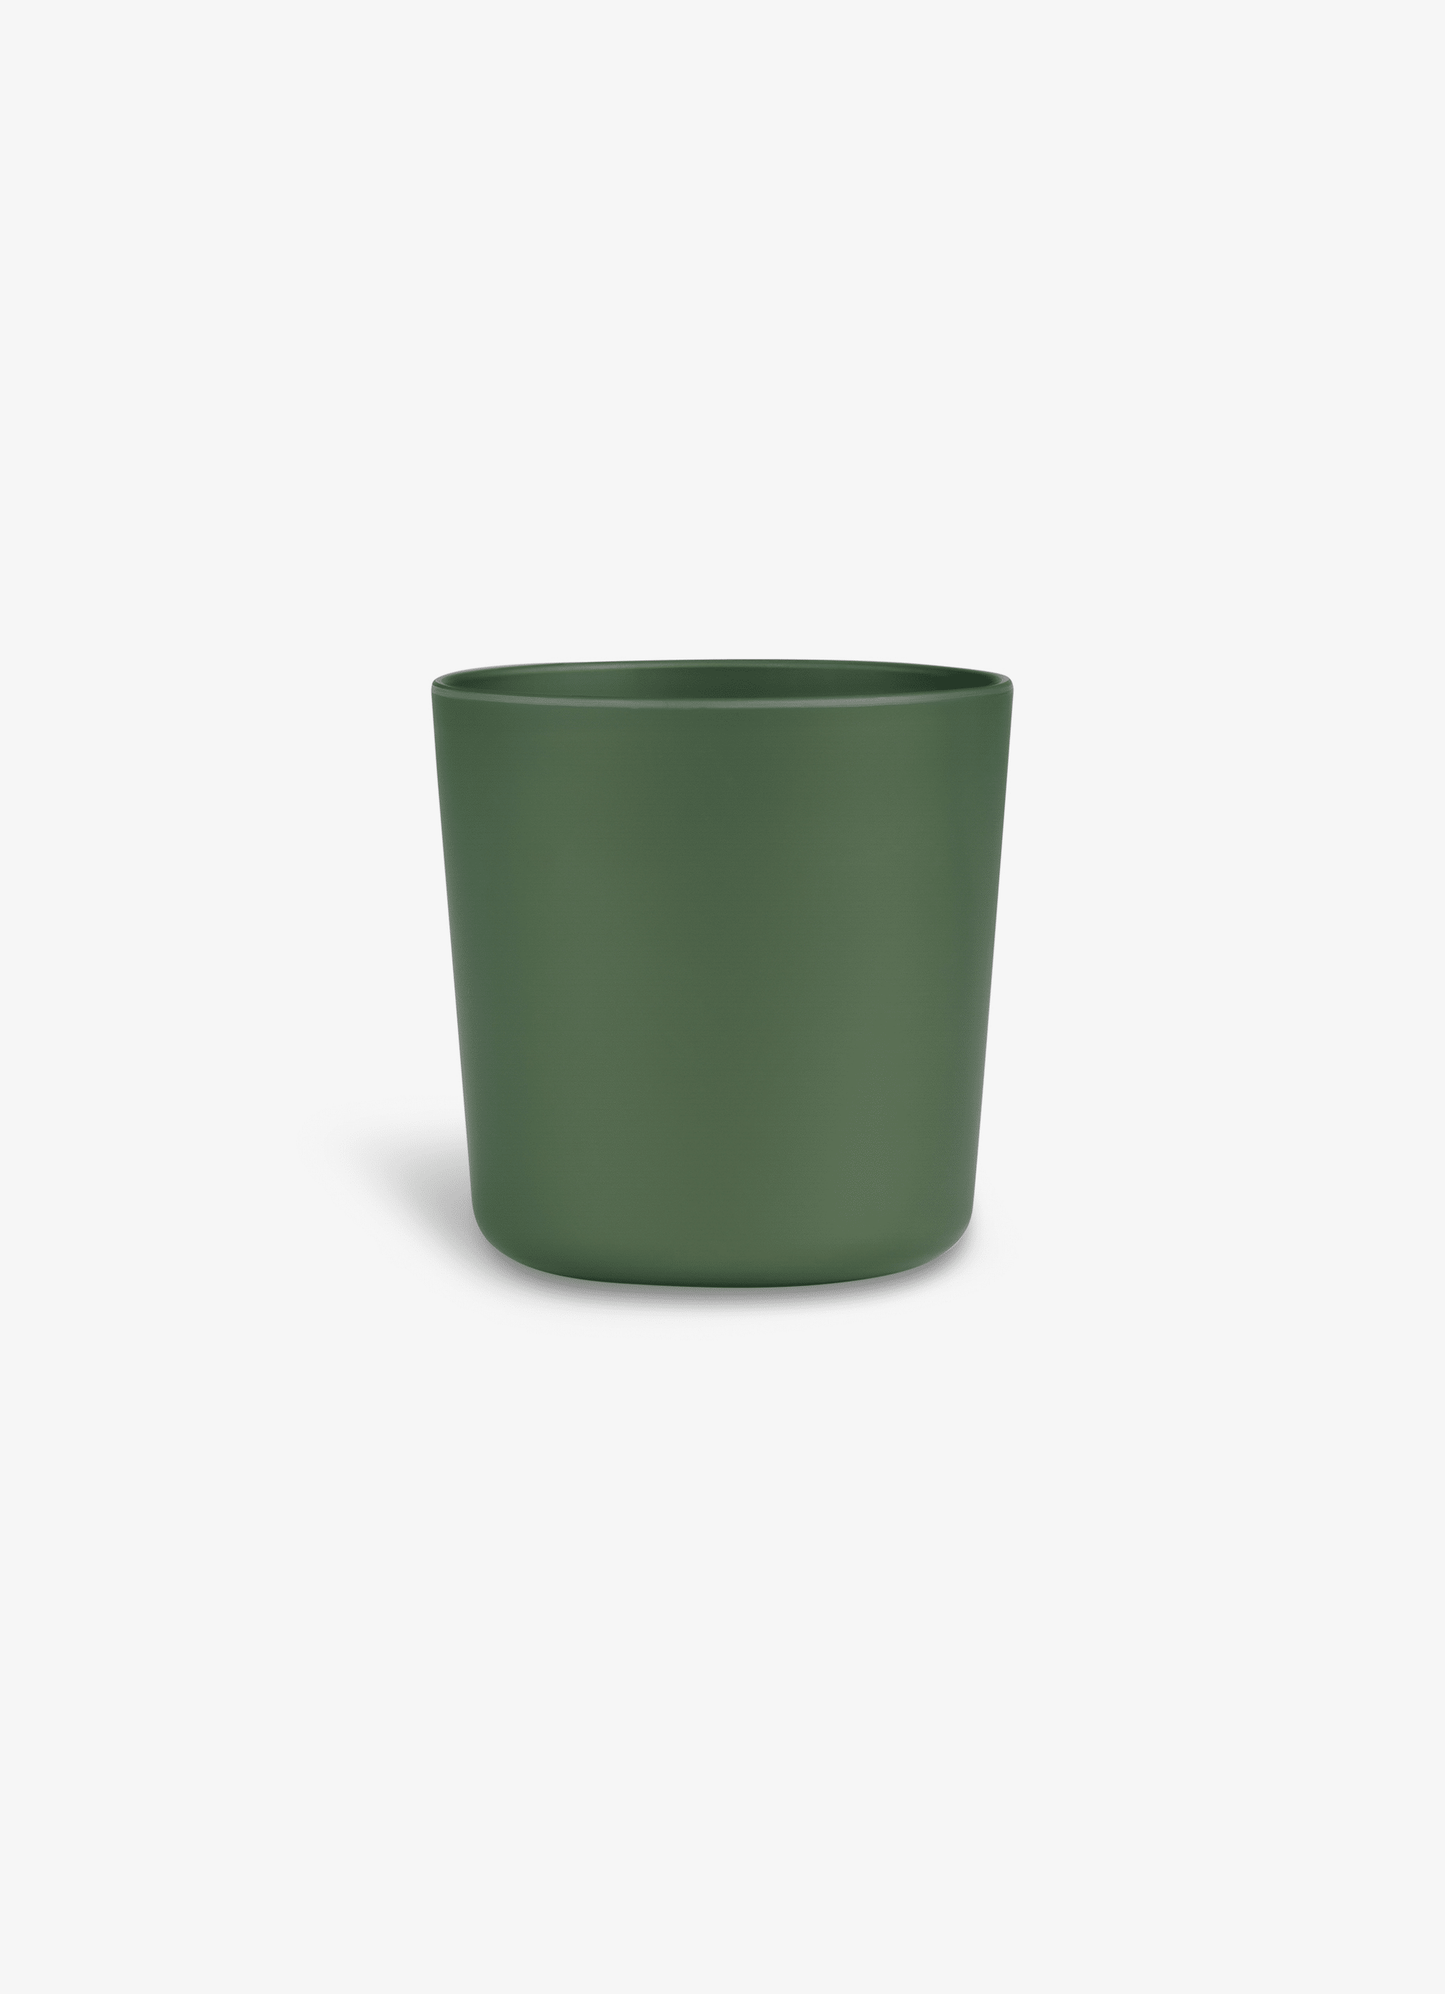 Bio Based Cups - Set of 4 - Green/ Cream